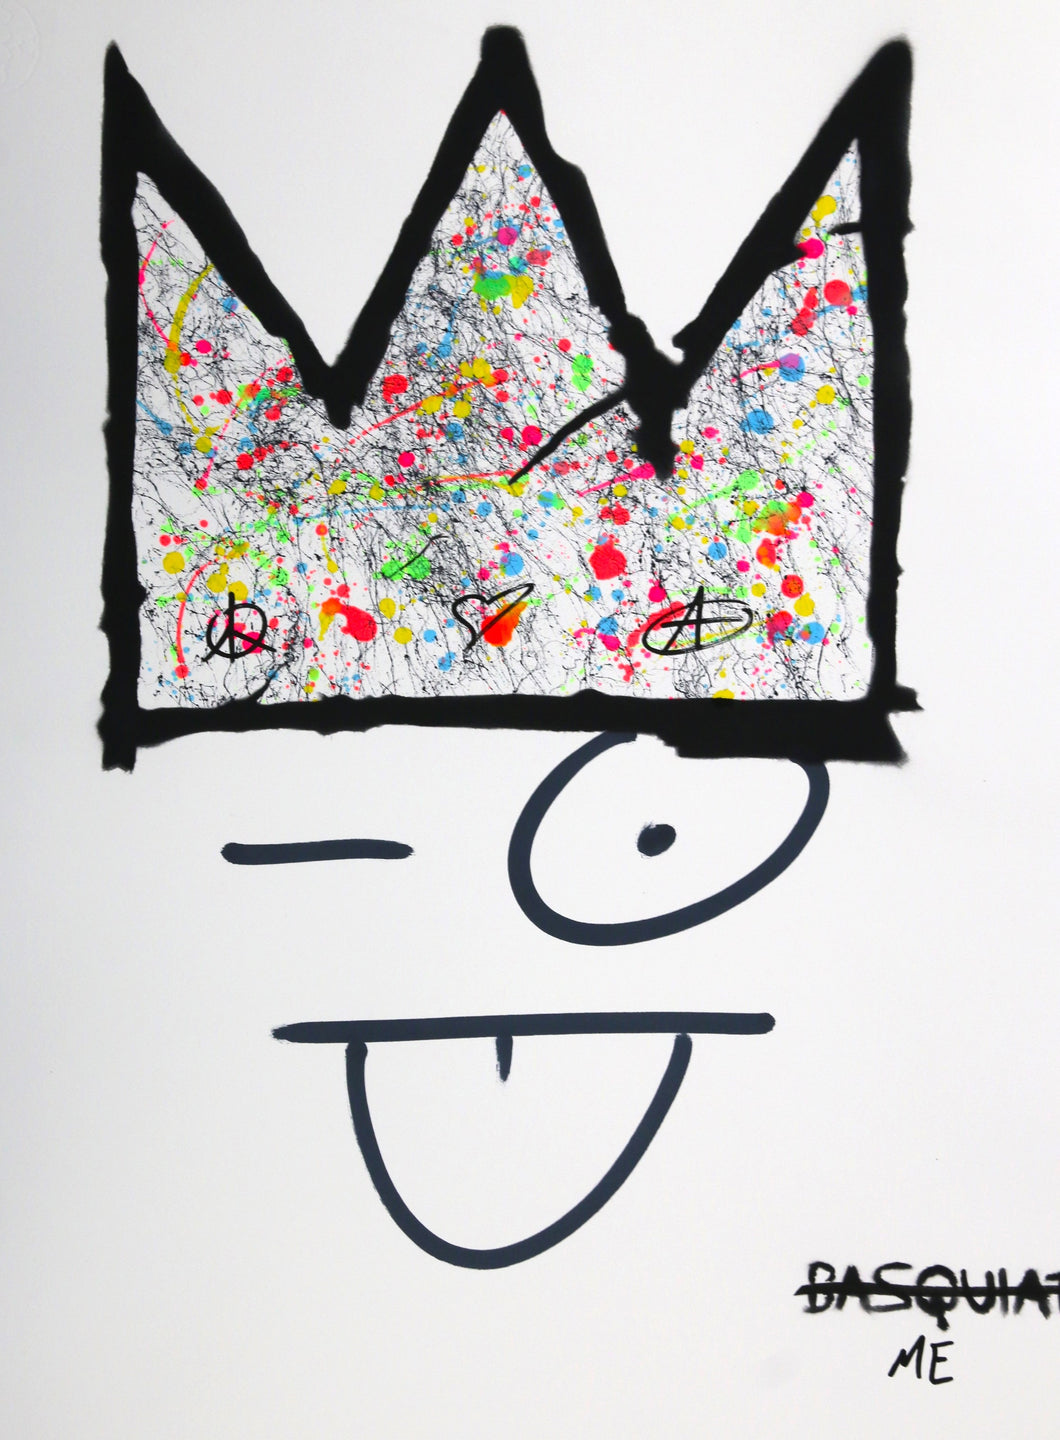 ZIEGLER T My Kid Just Ruined My Basquiat (Jackson Pollock version) - painting signed